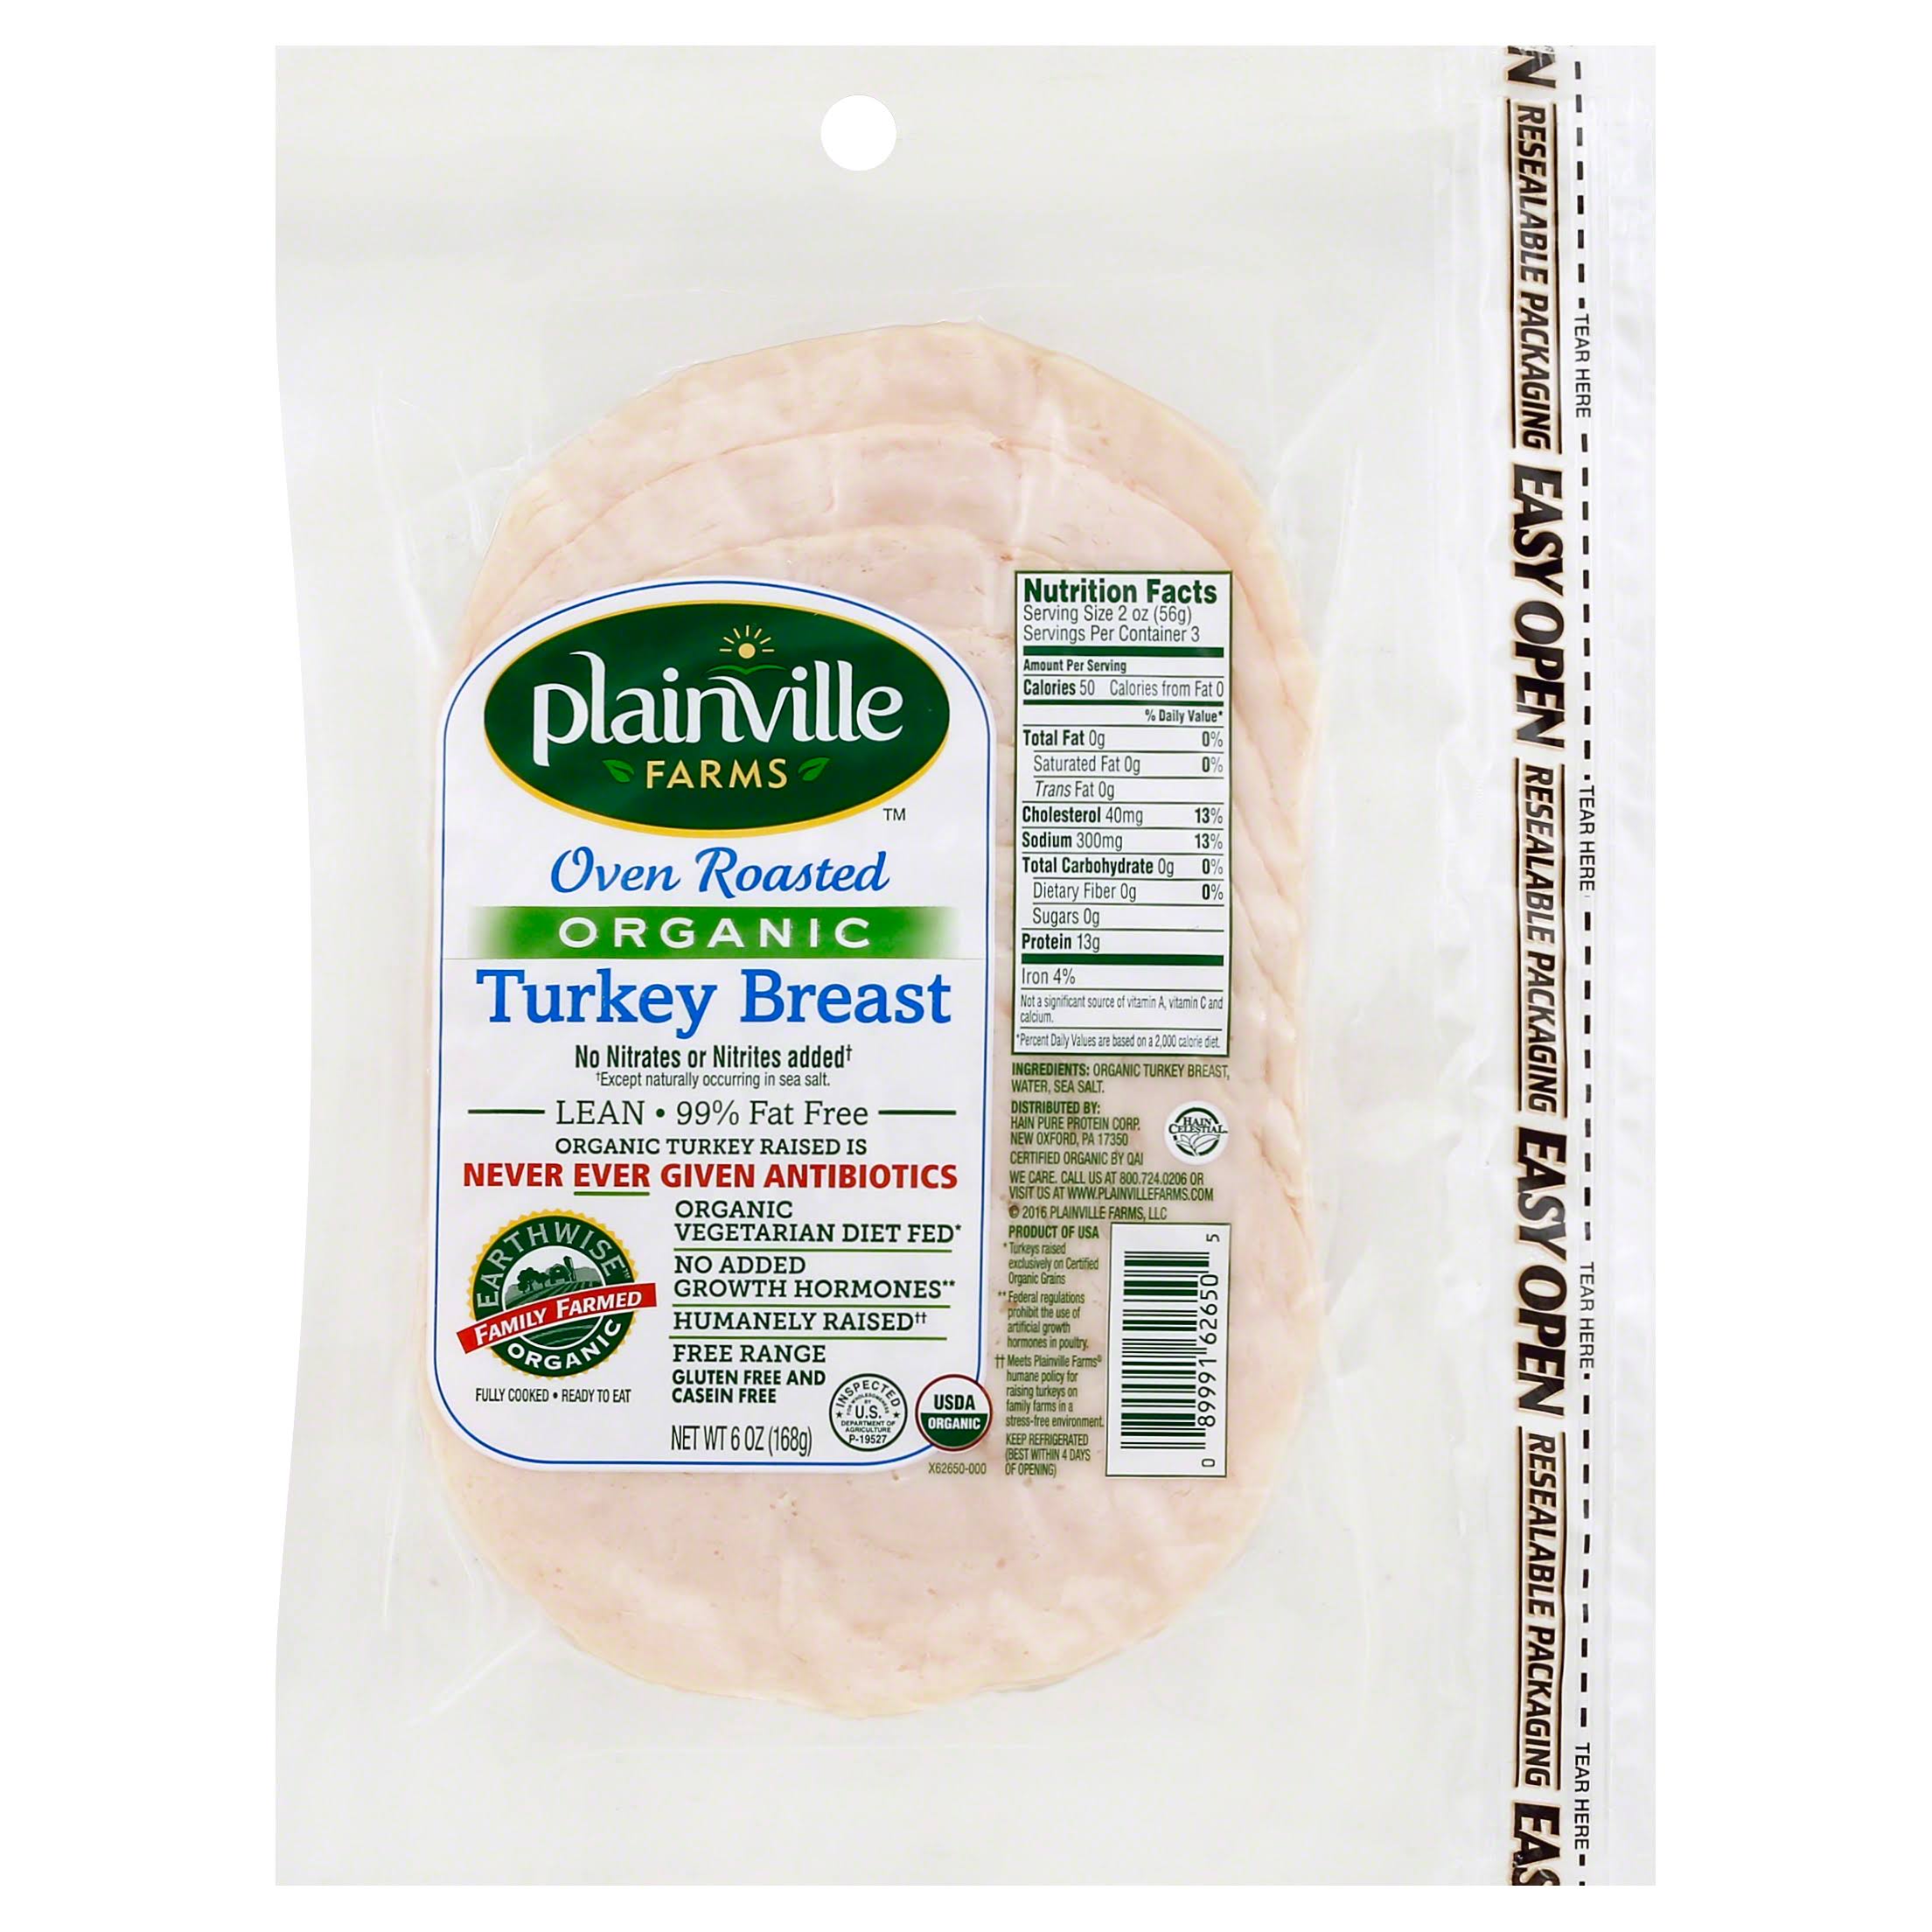 Plainville Farms Organic Turkey Breast, Oven Roasted - 6 oz